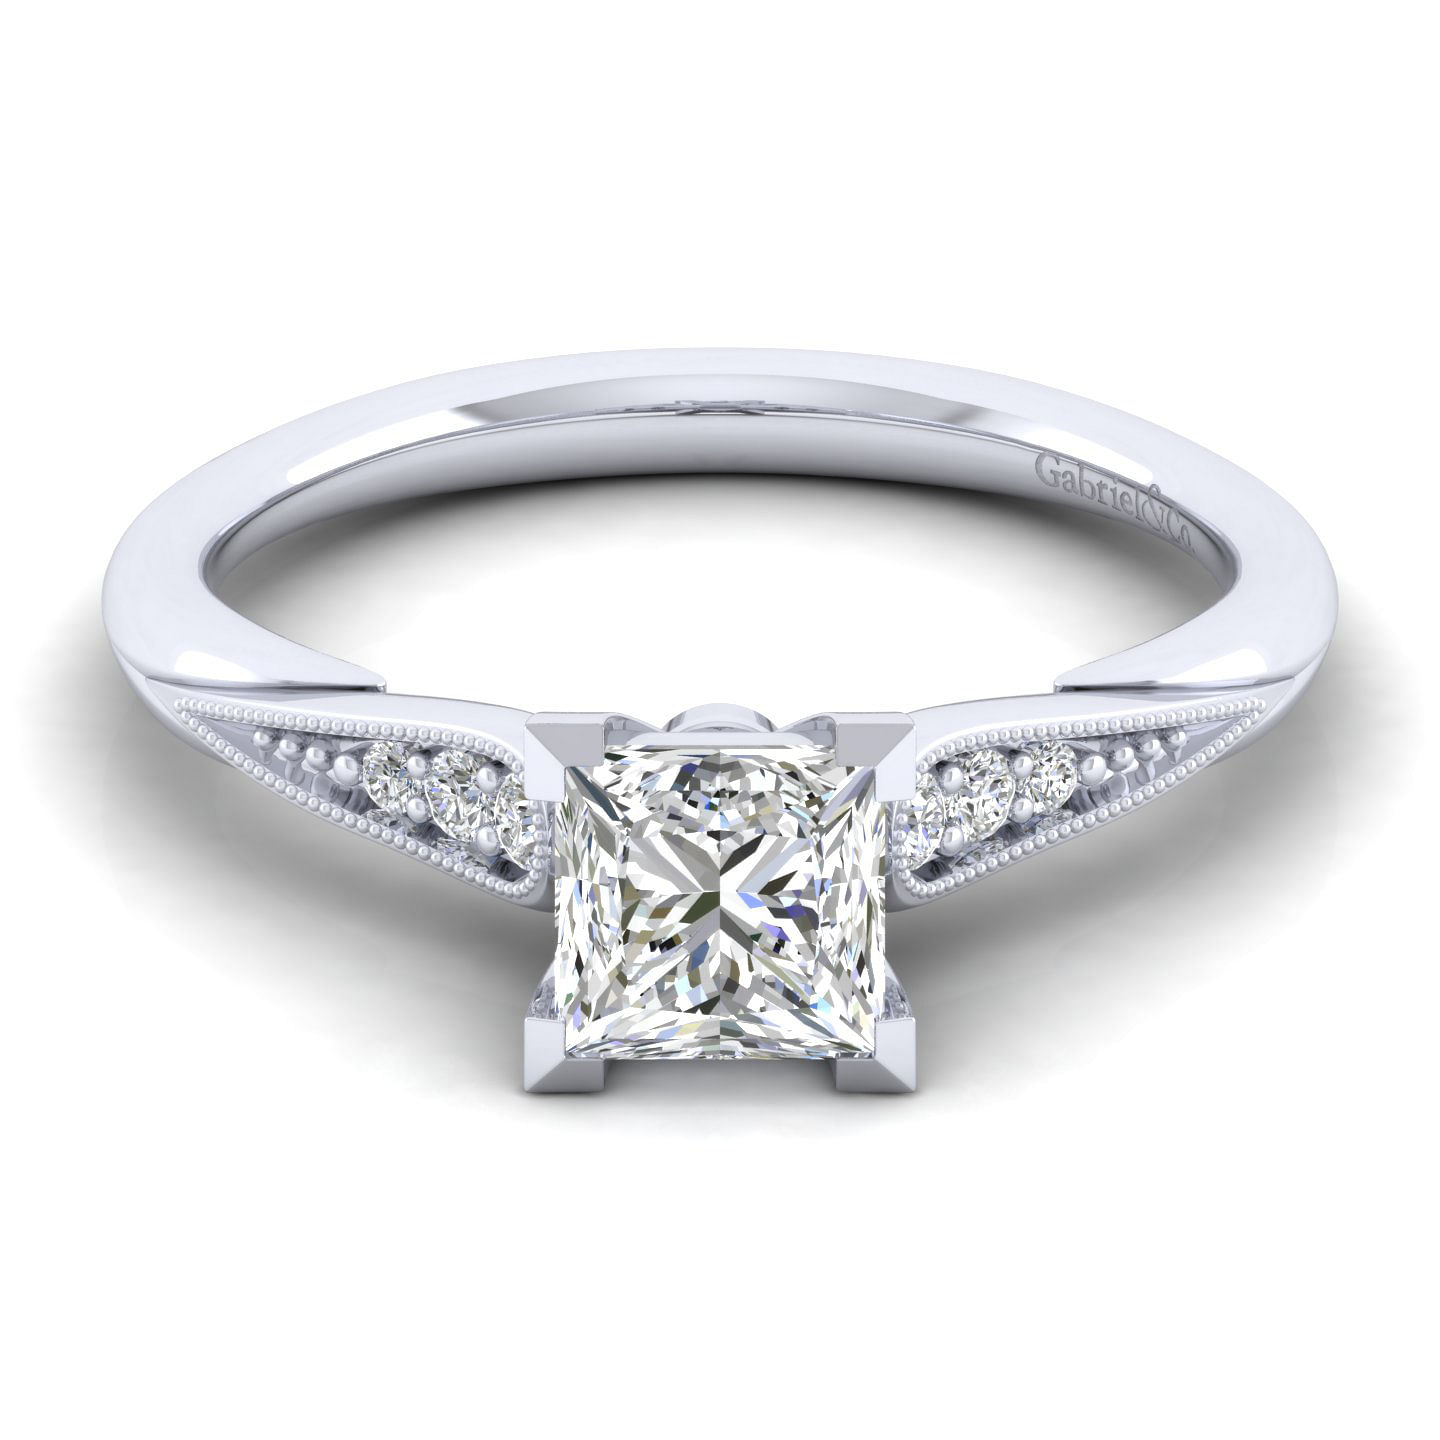 Riley - 14K White Gold Princess Cut Diamond Engagement Ring